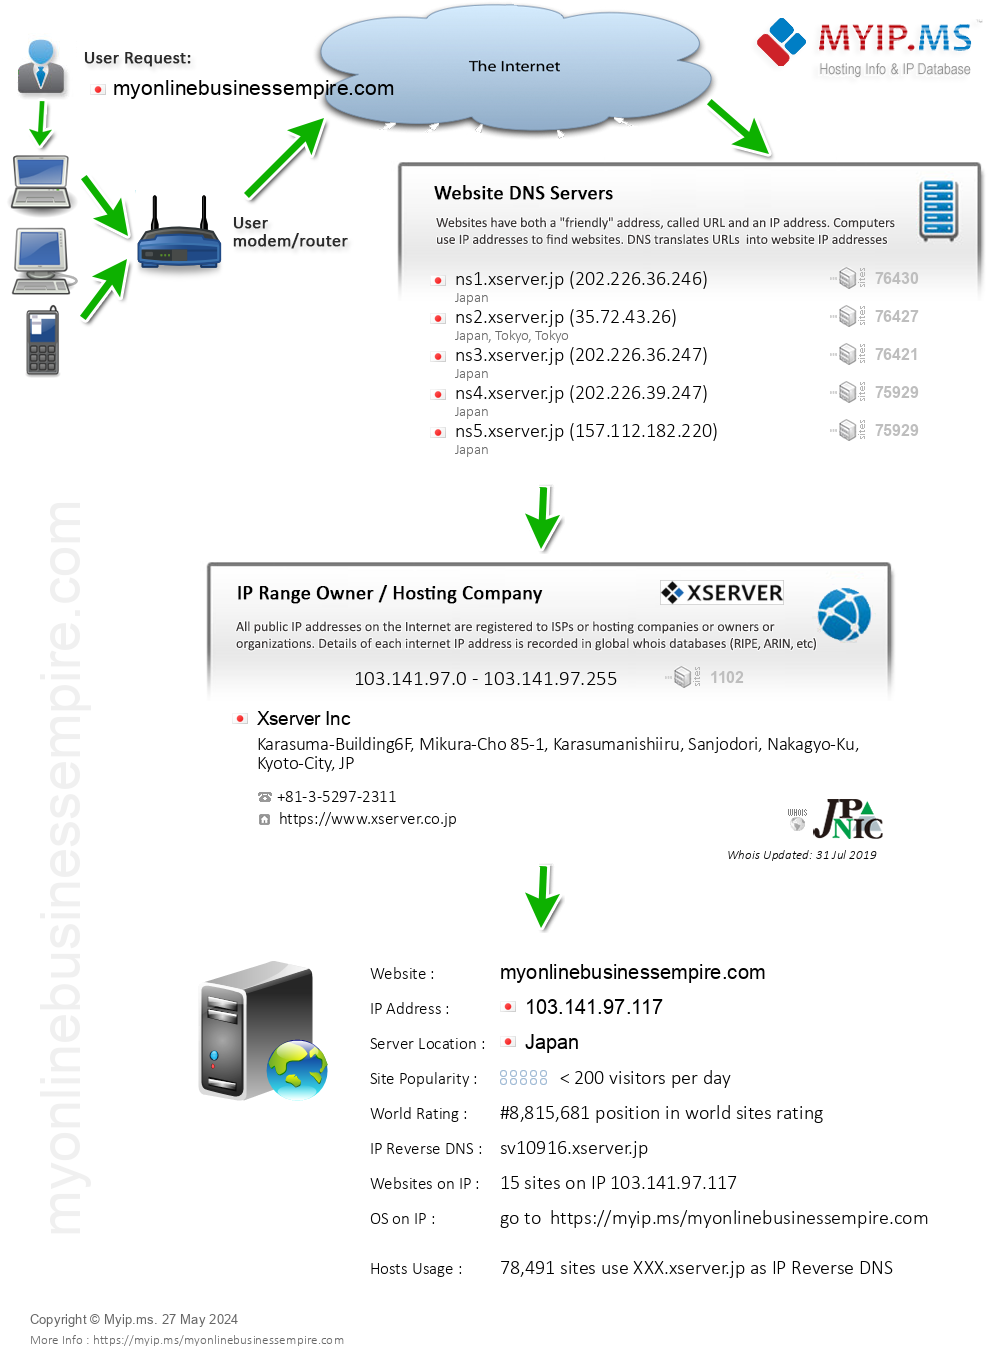 Myonlinebusinessempire.com - Website Hosting Visual IP Diagram